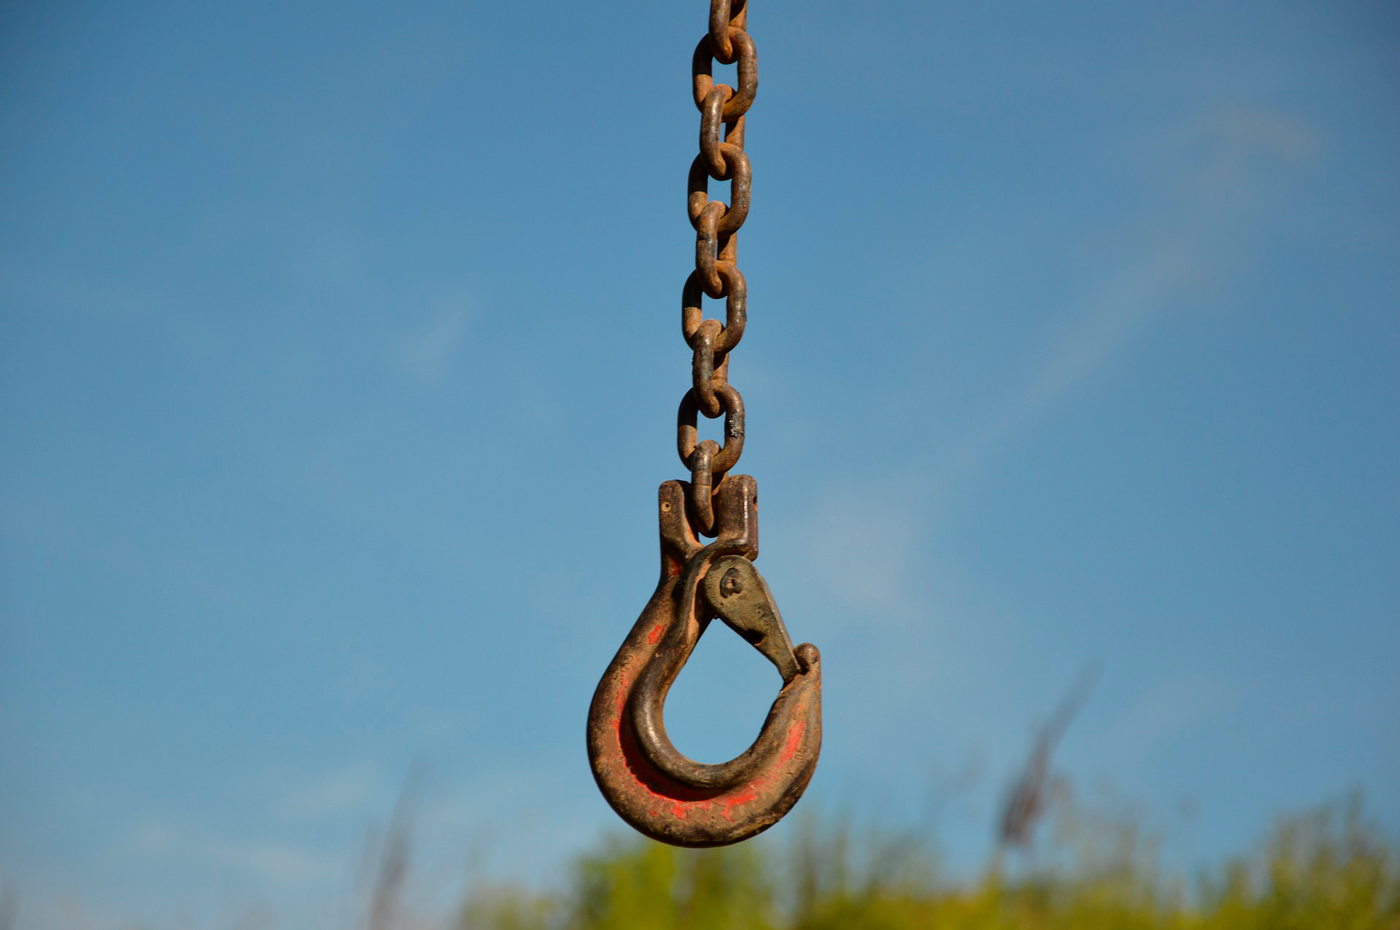 All Lifting Chain Slings